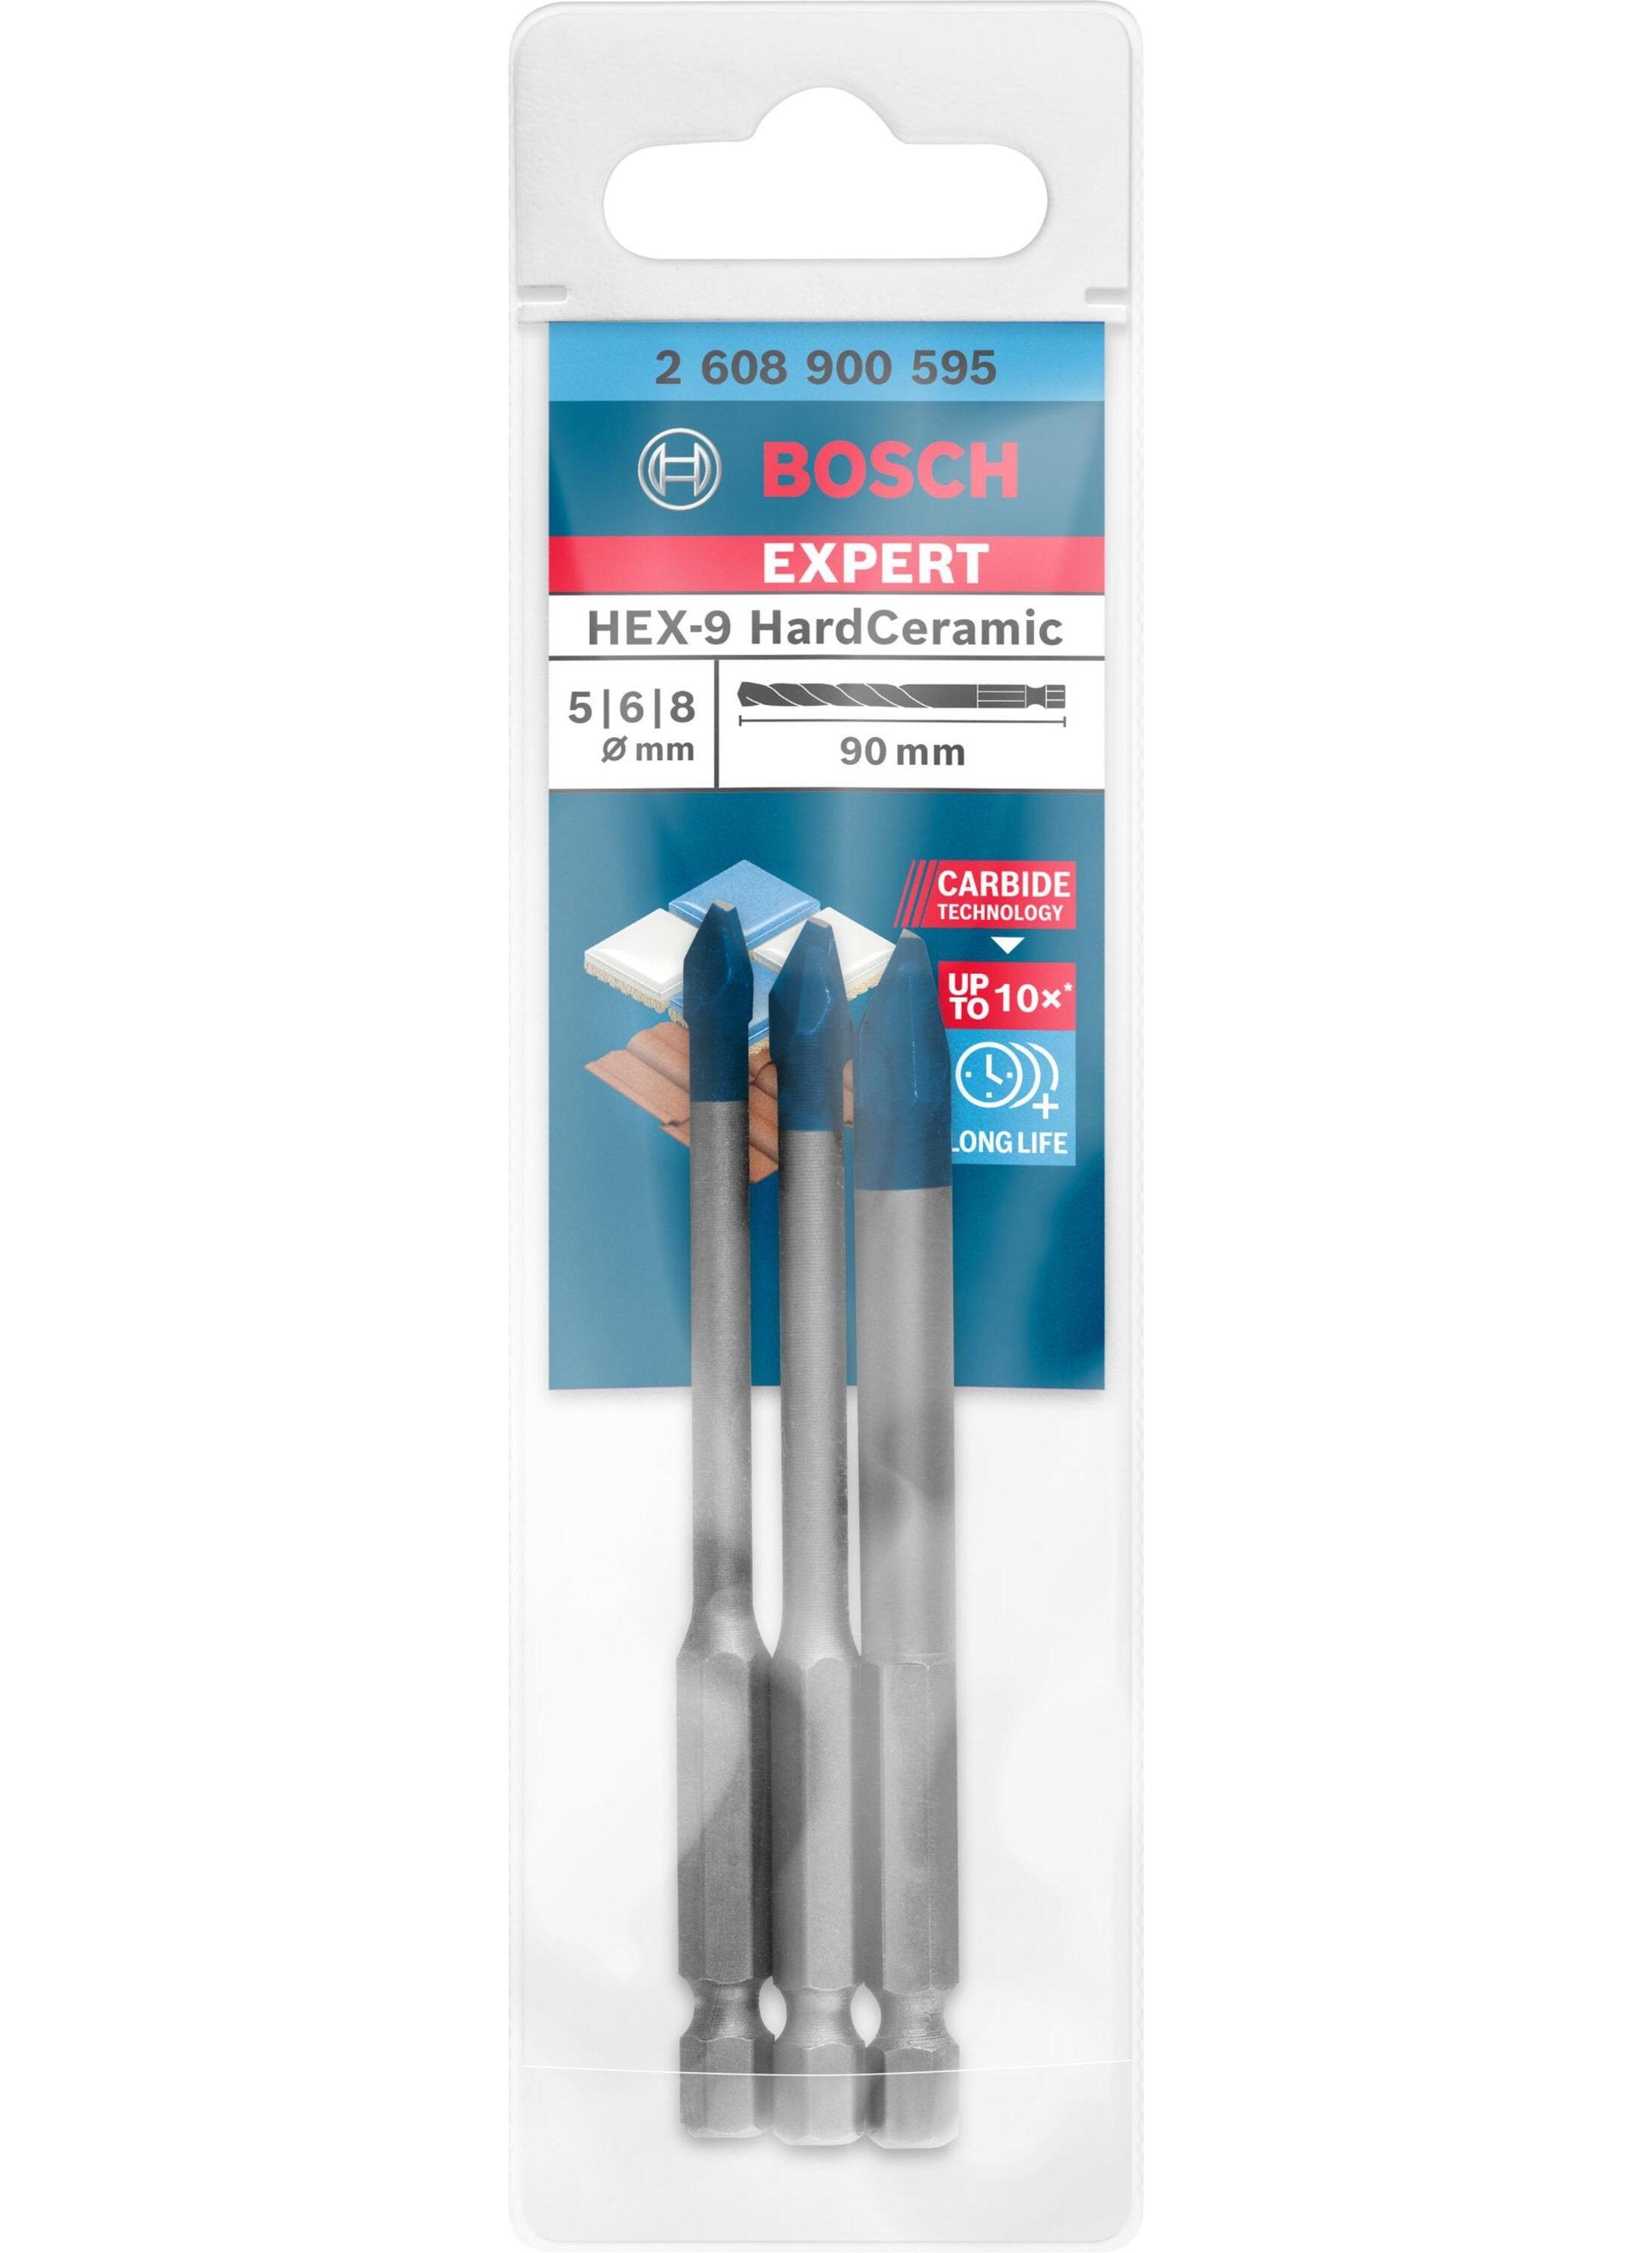 Bosch EXPERT HardCeramic HEX-9 Drill Bit Set 5/6/8 mm 3-pc 2608900595 Power Tool Services